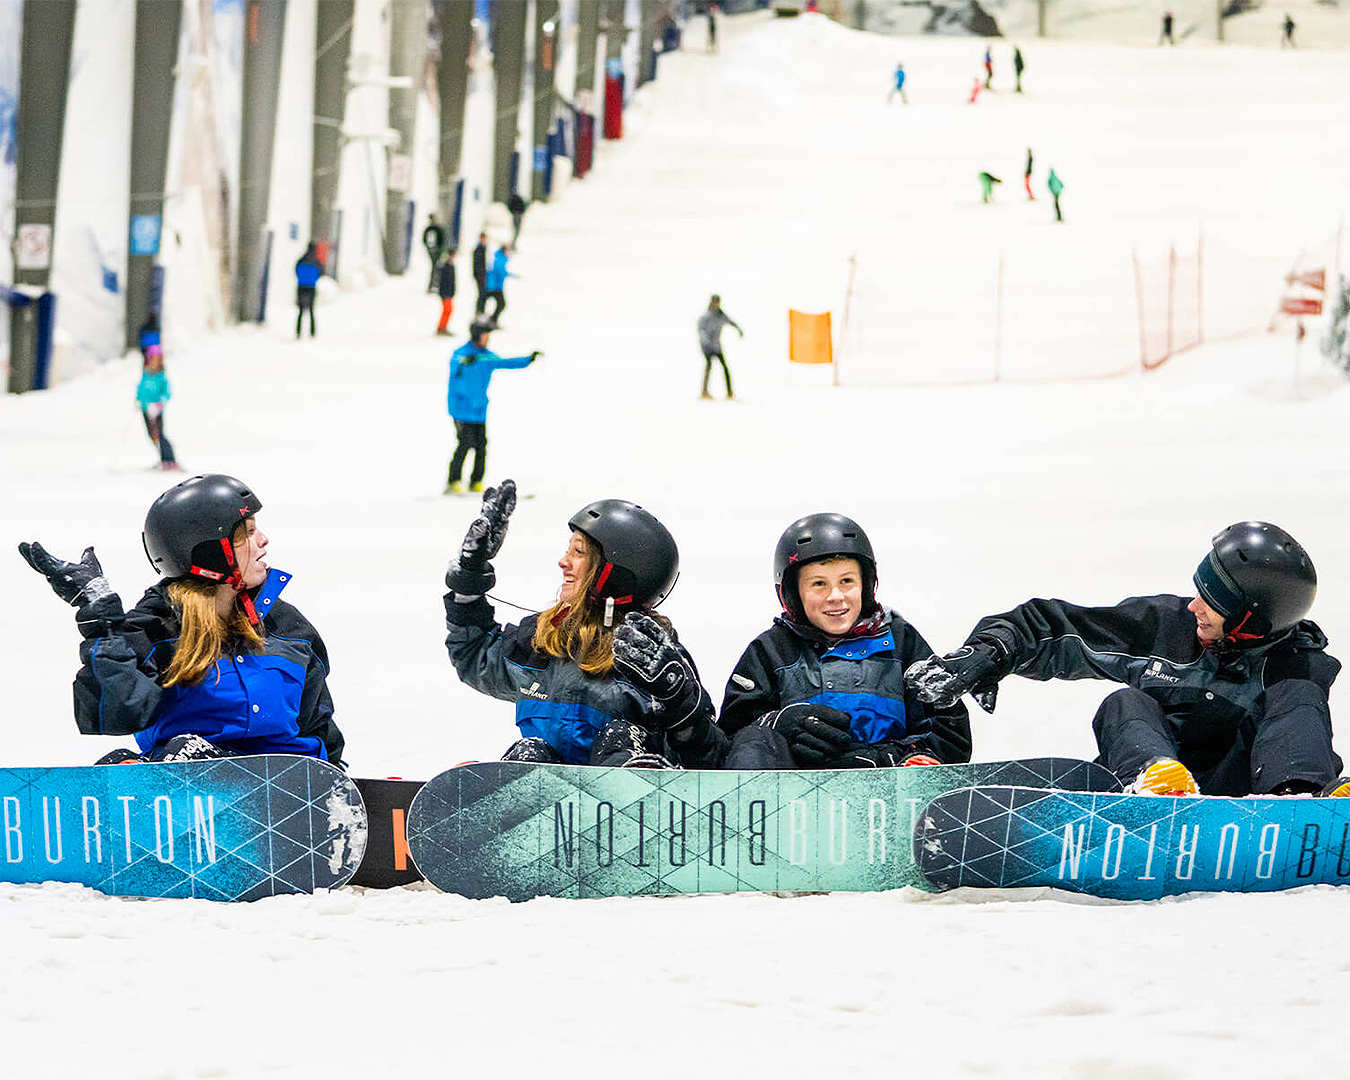 Kids enjoying their time on the slopes at Snowplanet.